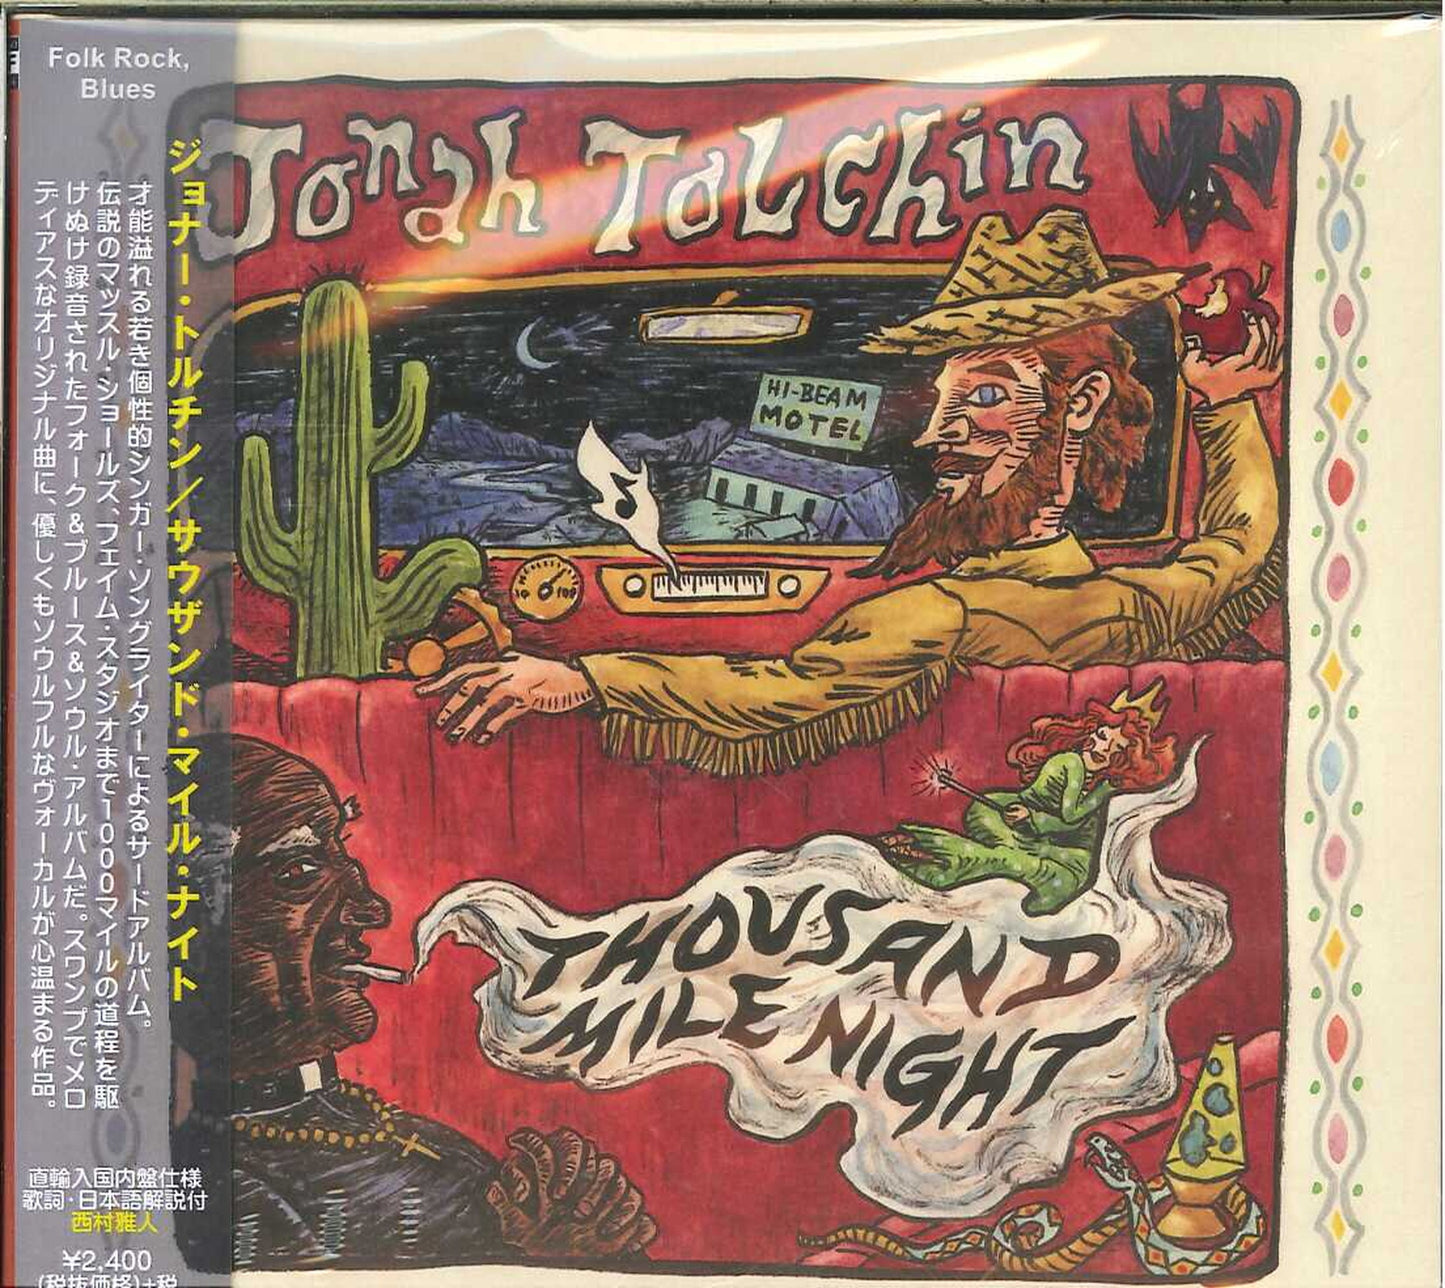 Jonah Tolchin - Thousand Mile Night - Japan CD